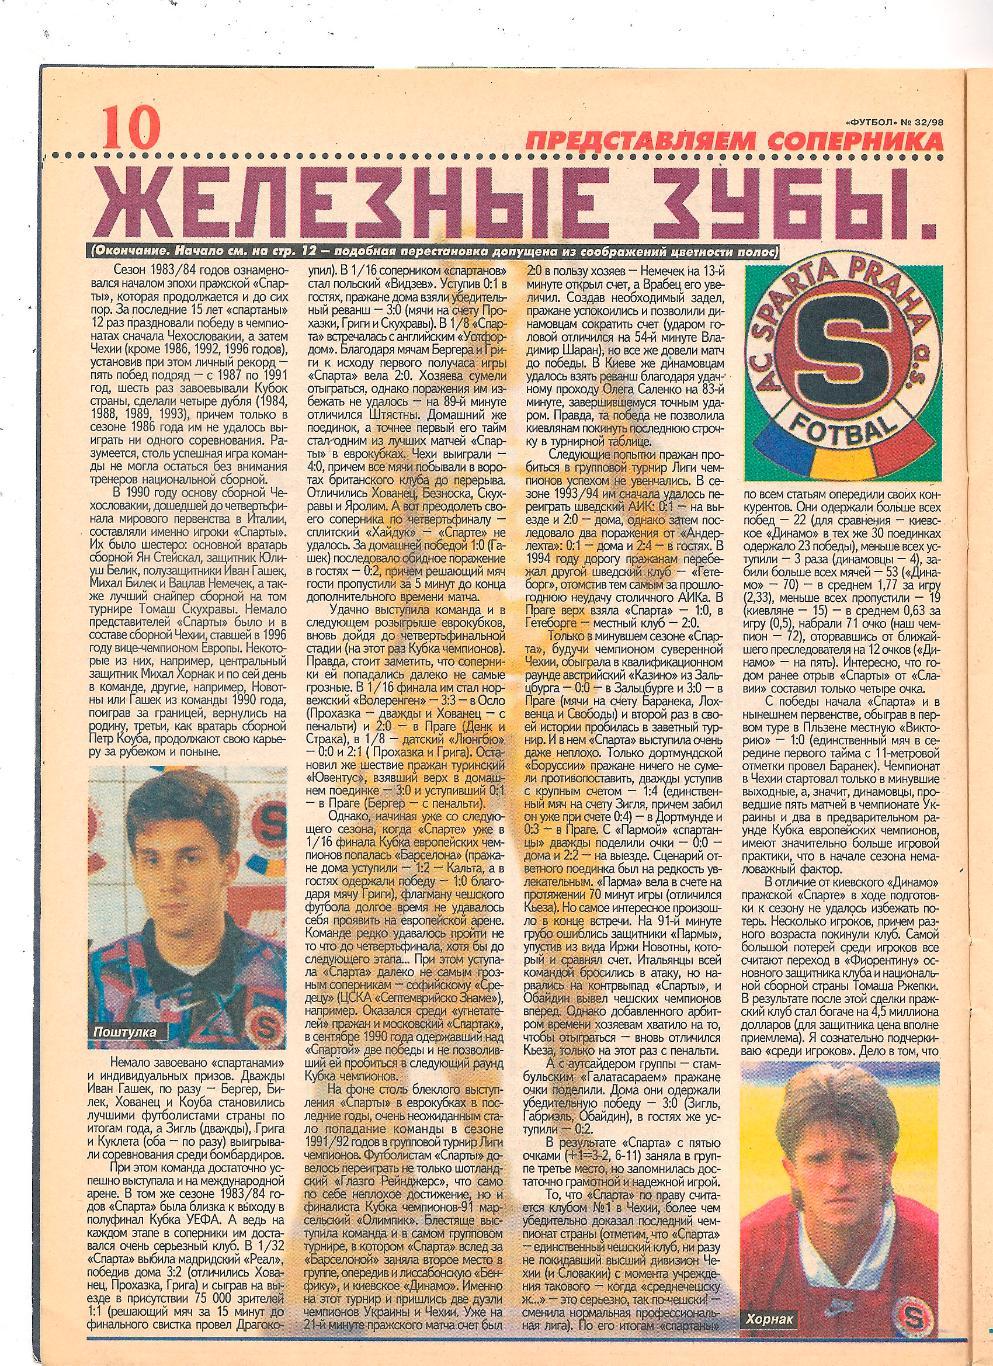 Футбол 1998 (август № 32) журнал. 4